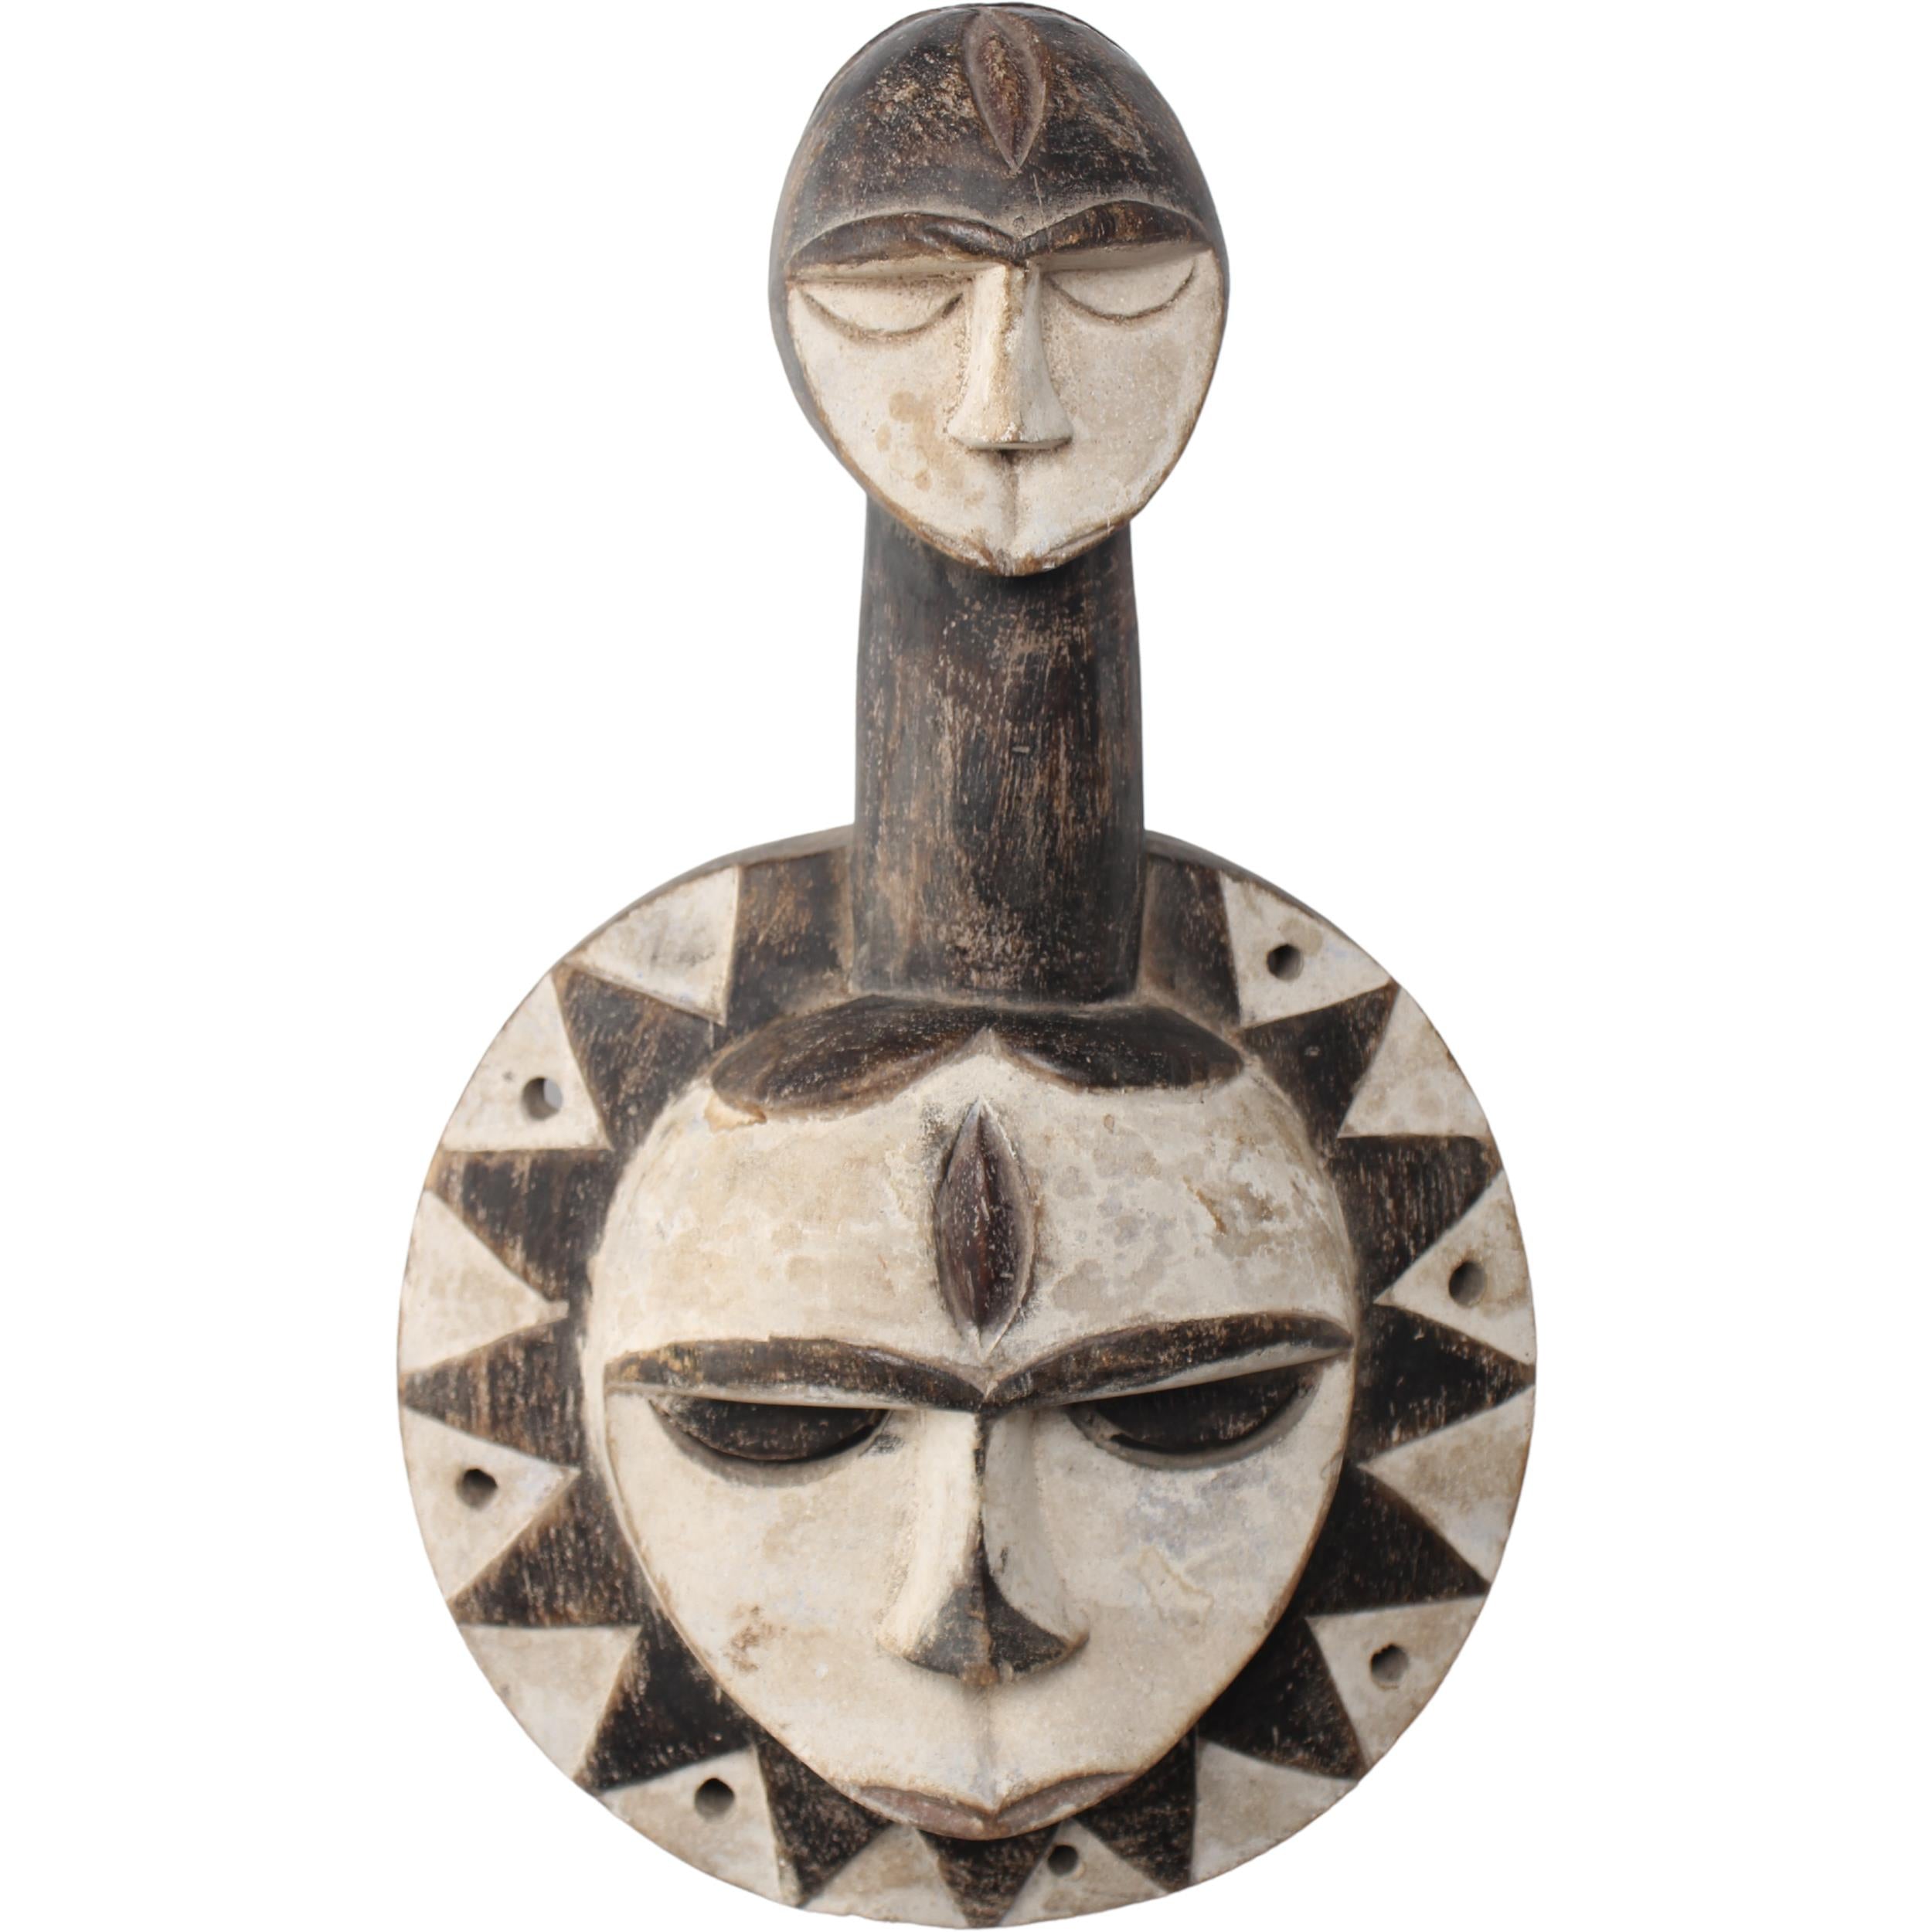 Eket Tribe Mask ~16.1" Tall